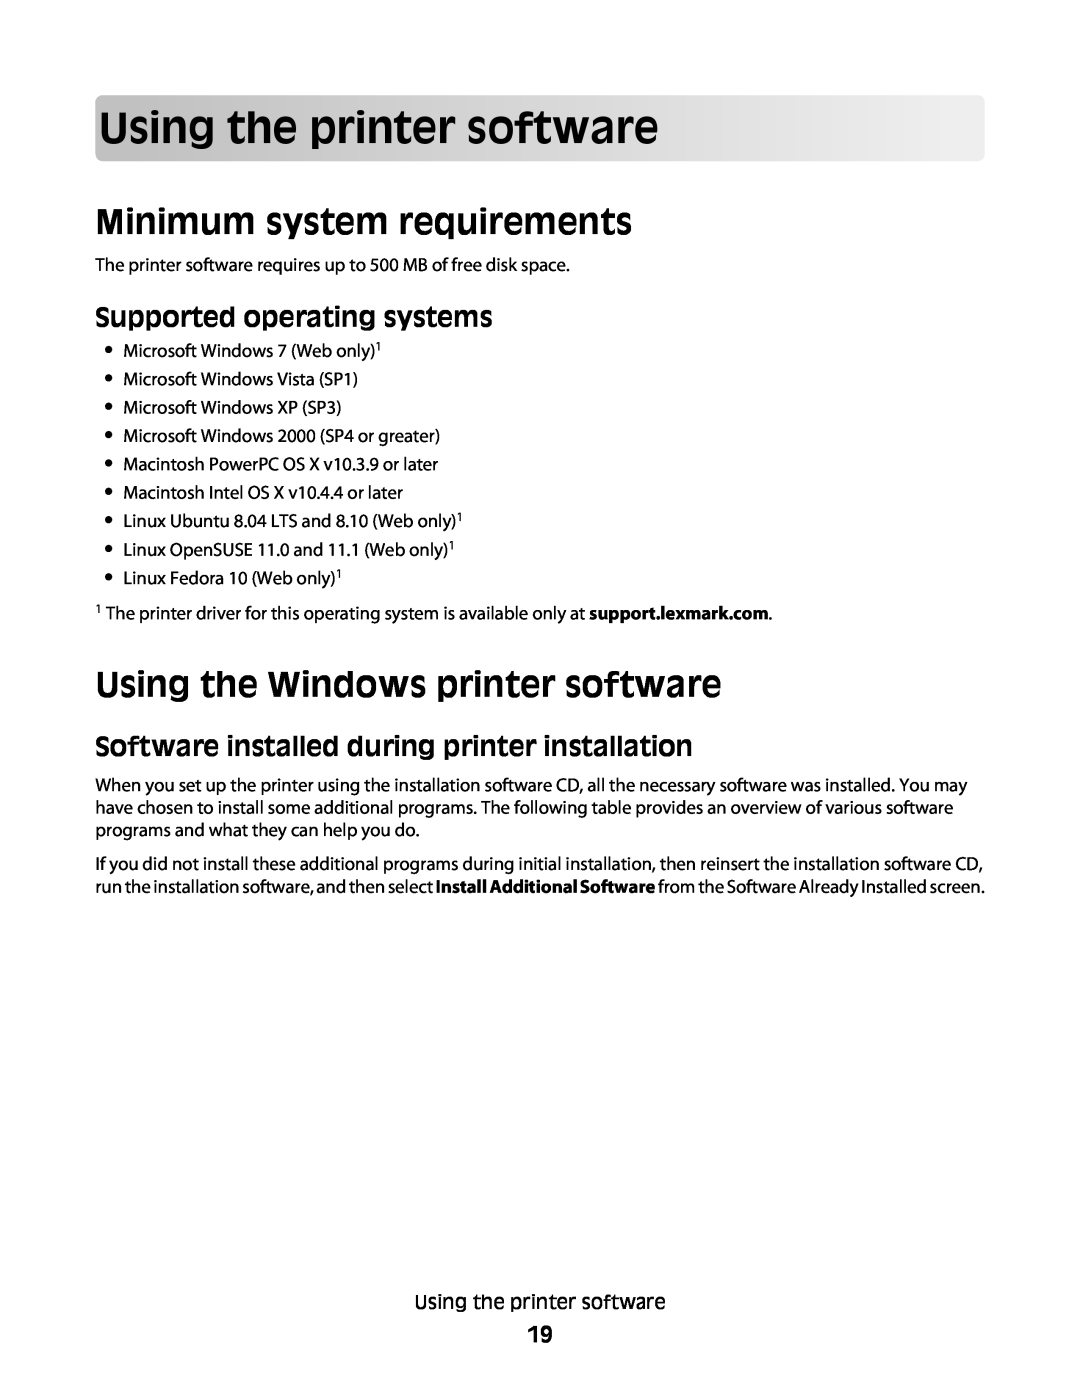 Lexmark 10E, 101 manual Usingtheprintersoftware, Minimum system requirements, Using the Windows printer software 